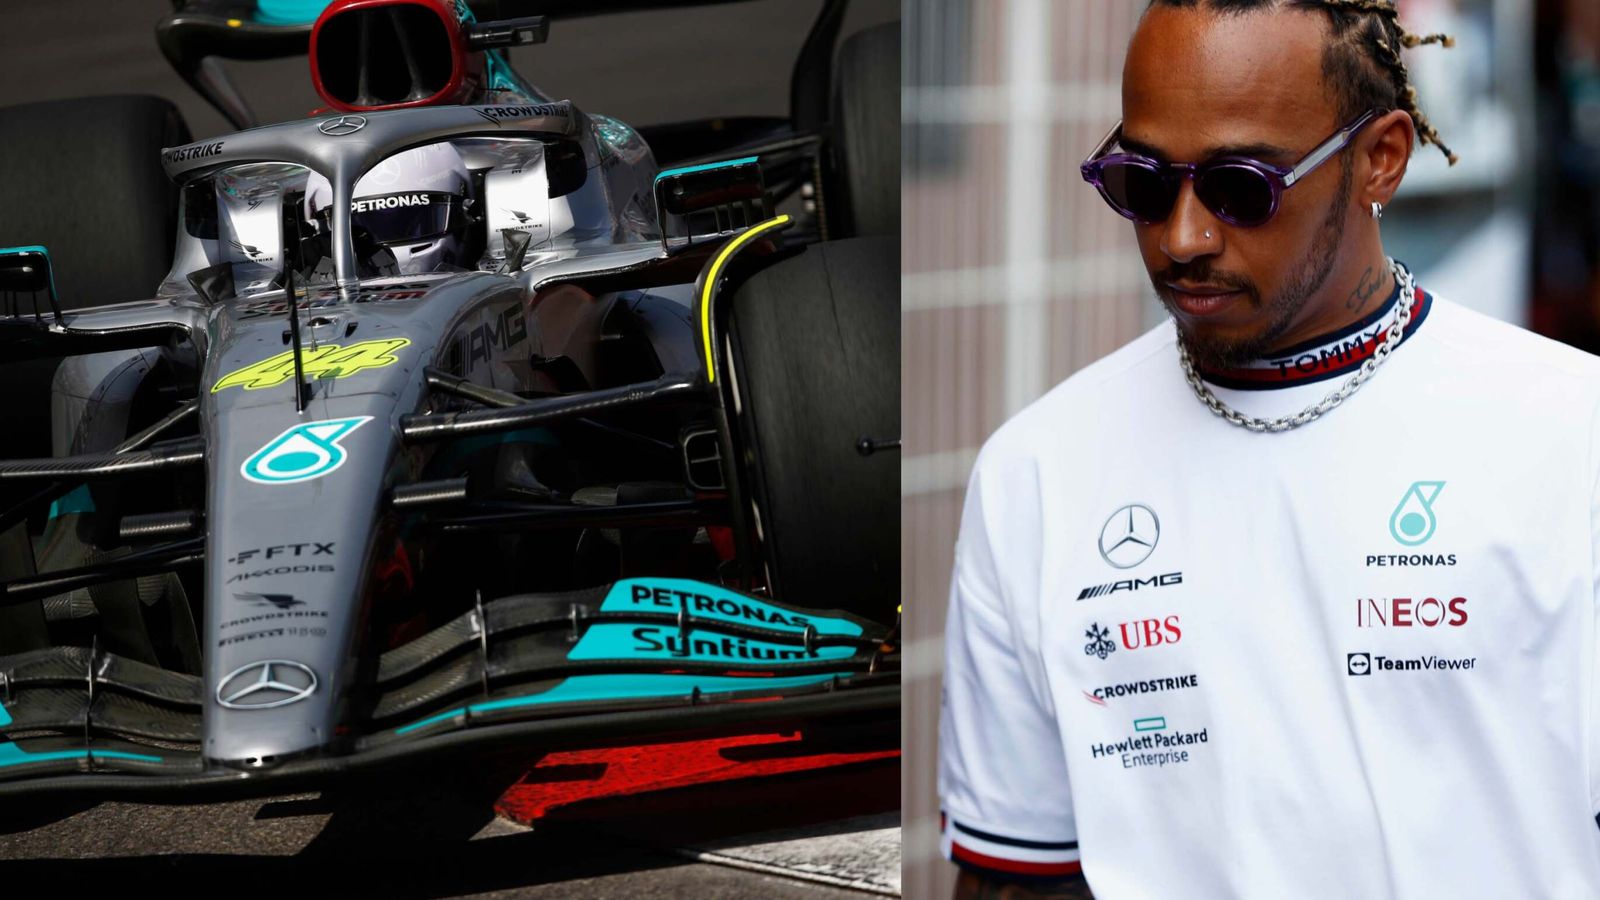 Monaco GP: Lewis Hamilton bemoans 'bumpiest rollercoaster' in Mercedes as Charles Leclerc takes control